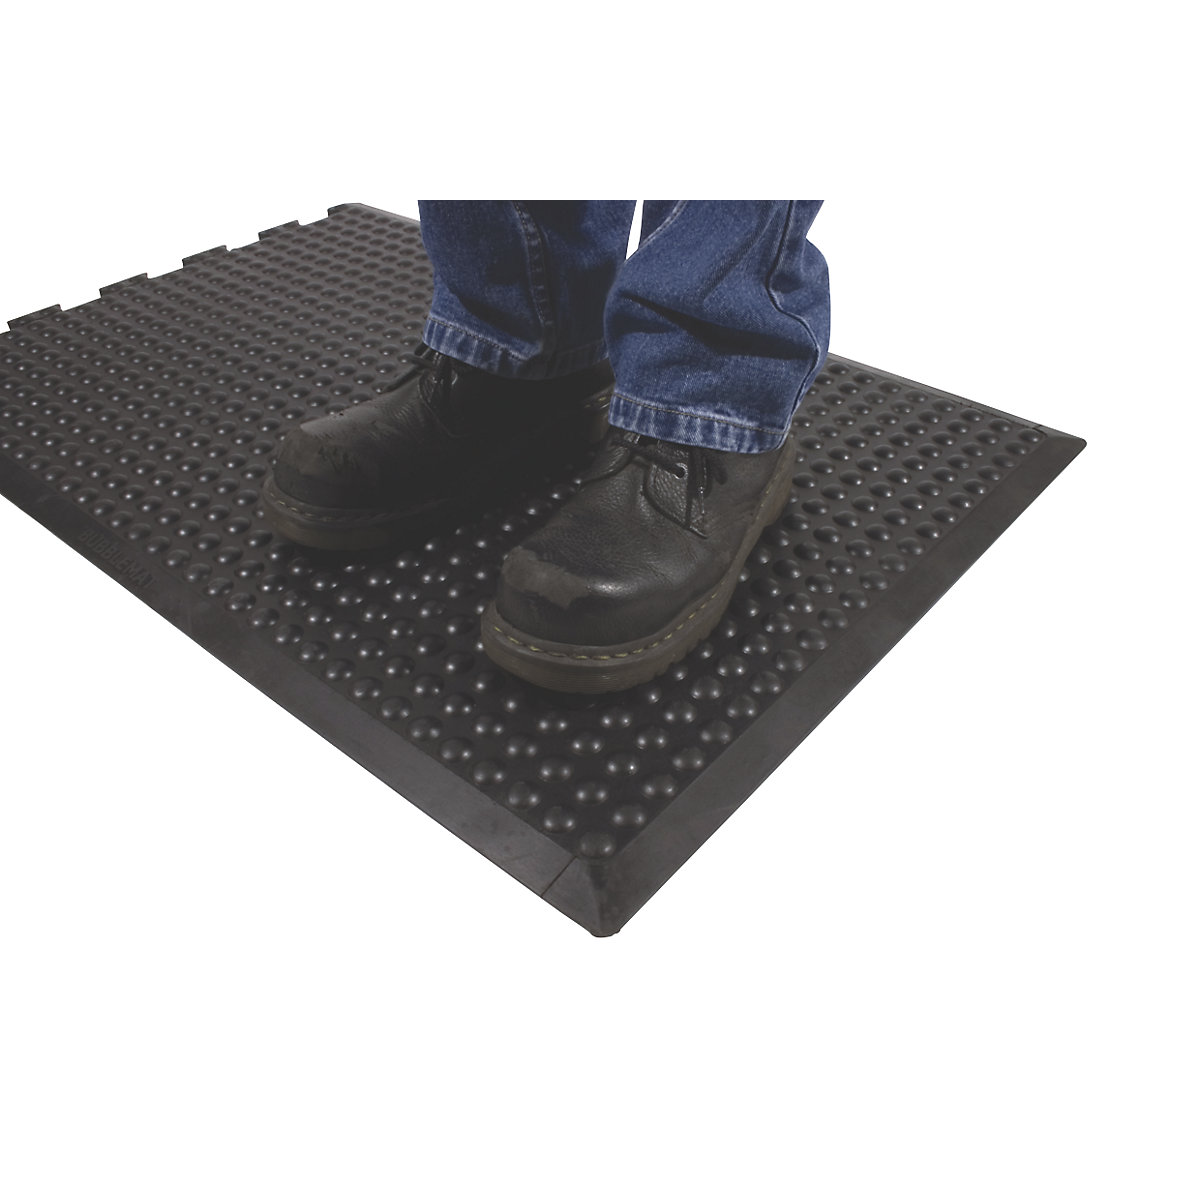 Bubblemat anti-fatigue matting